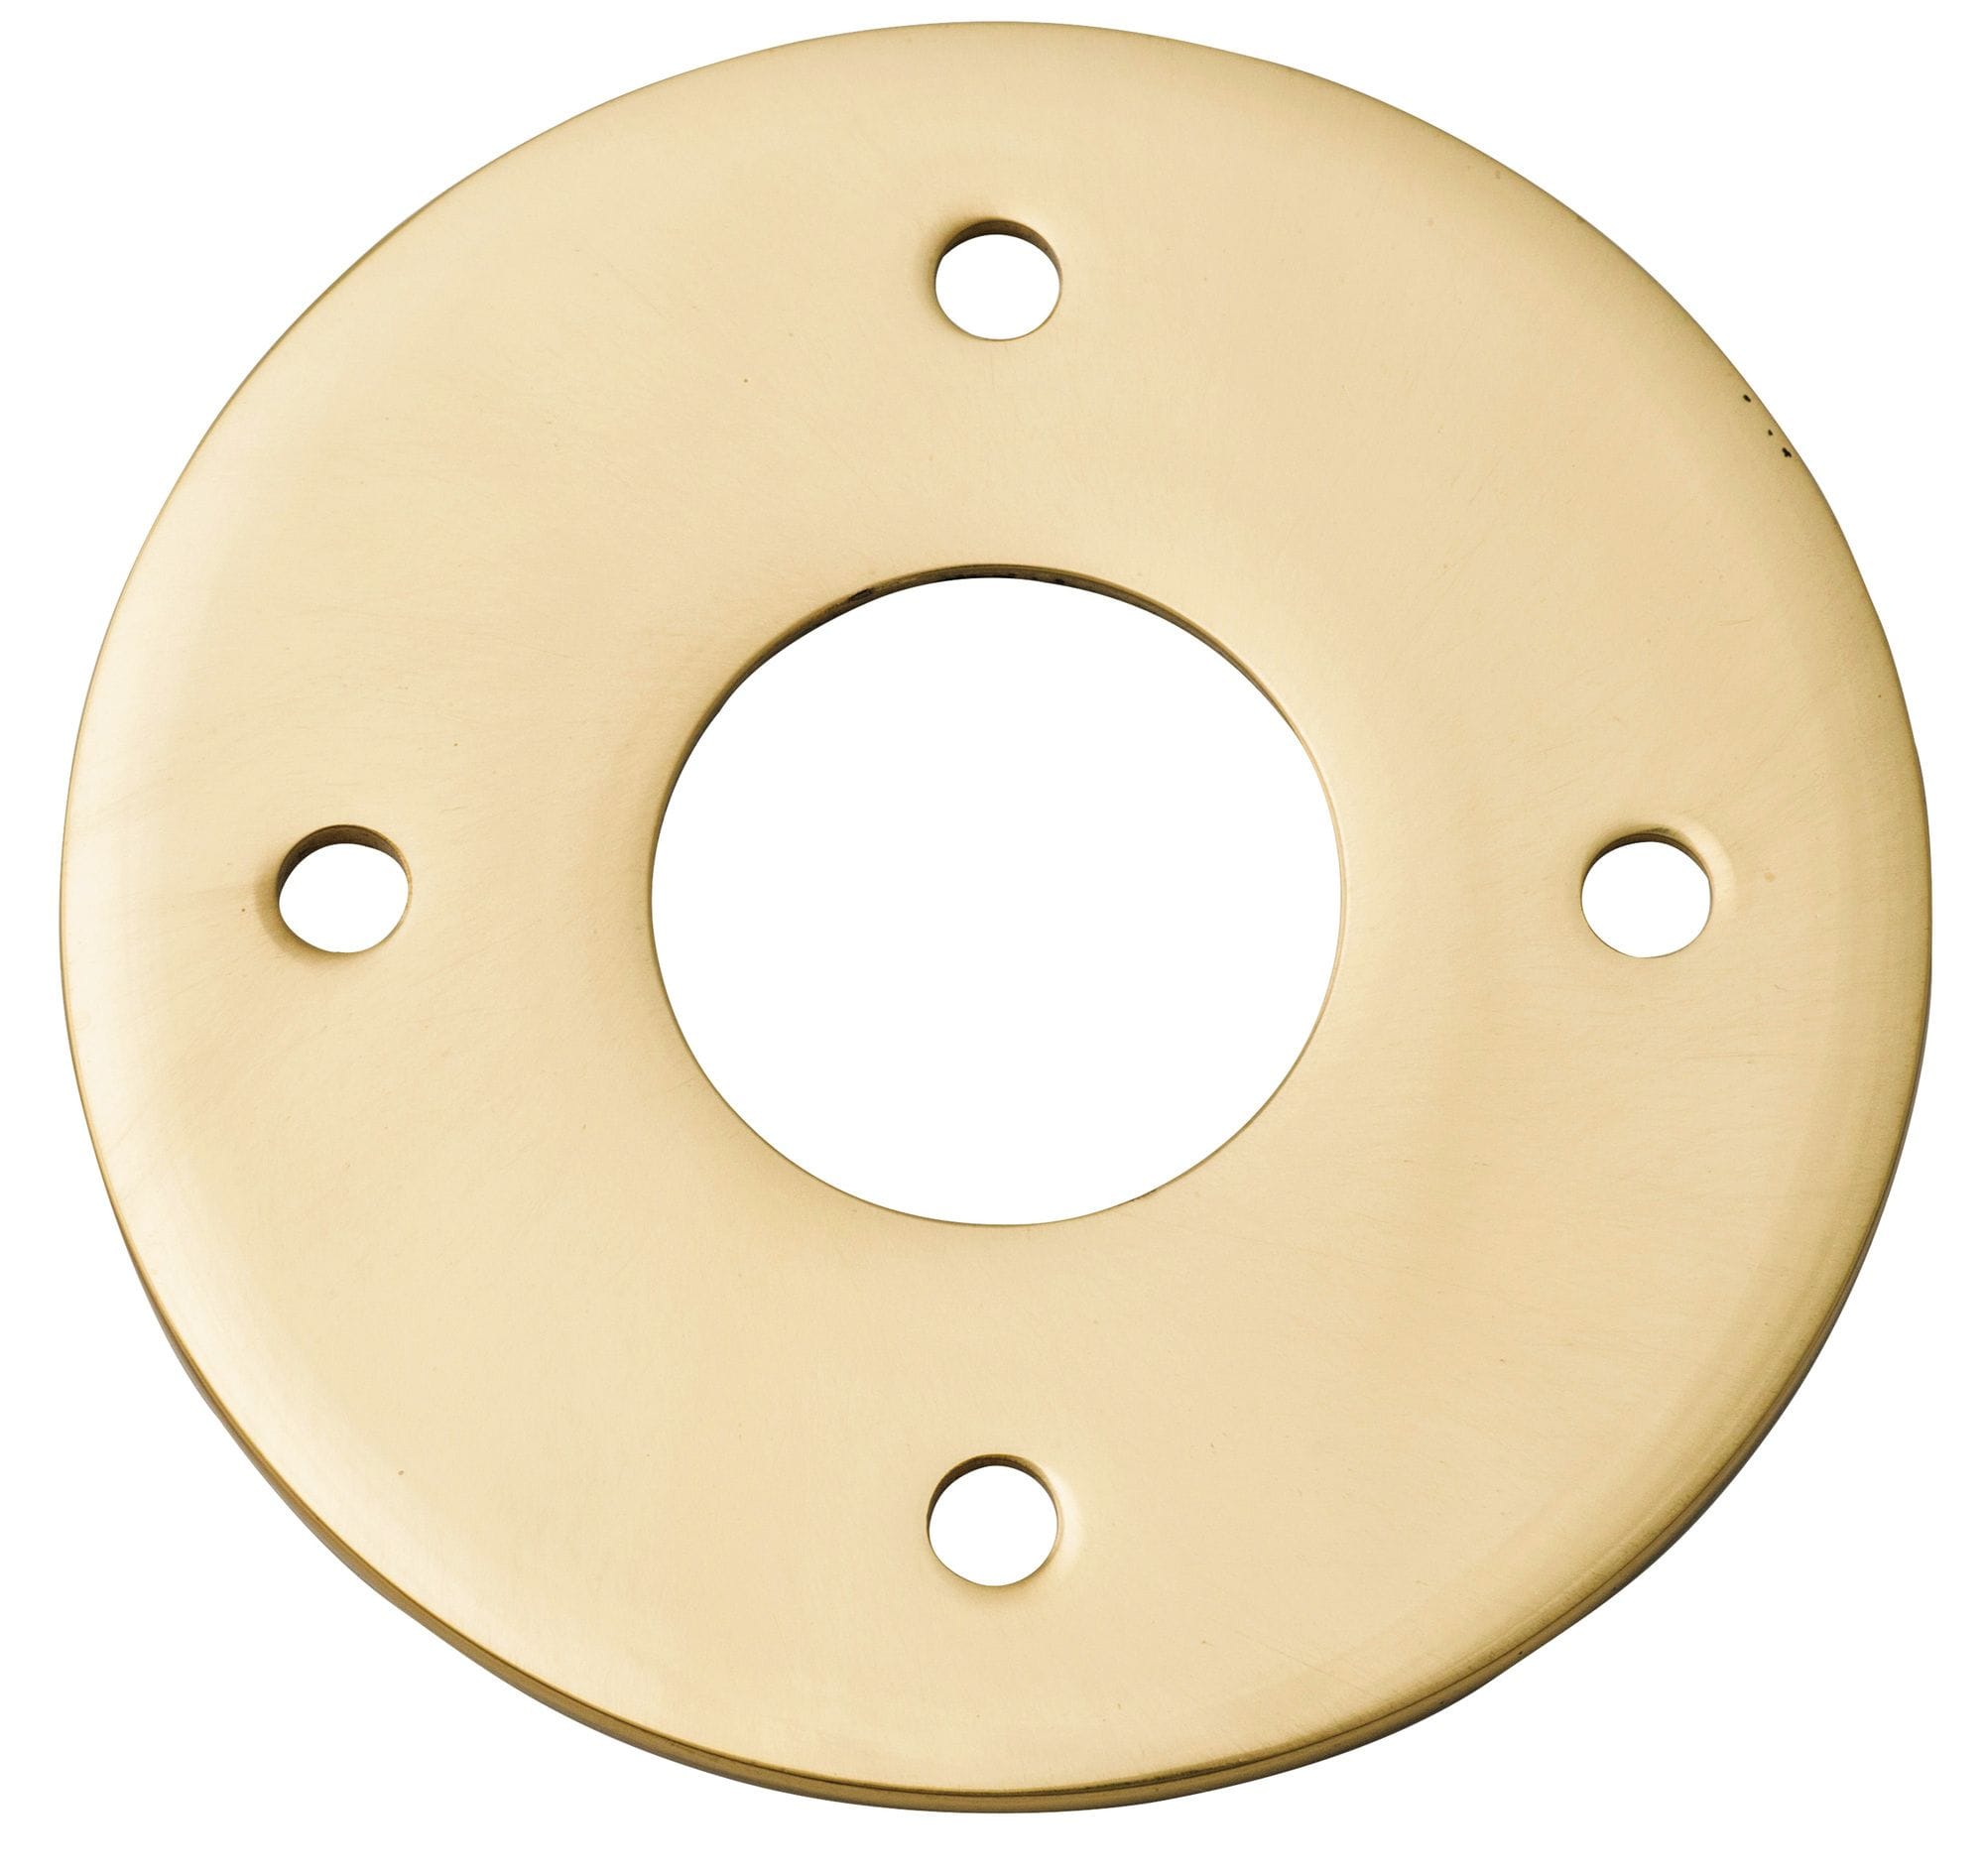 Adaptor Plate (Pair) Round Polished Brass